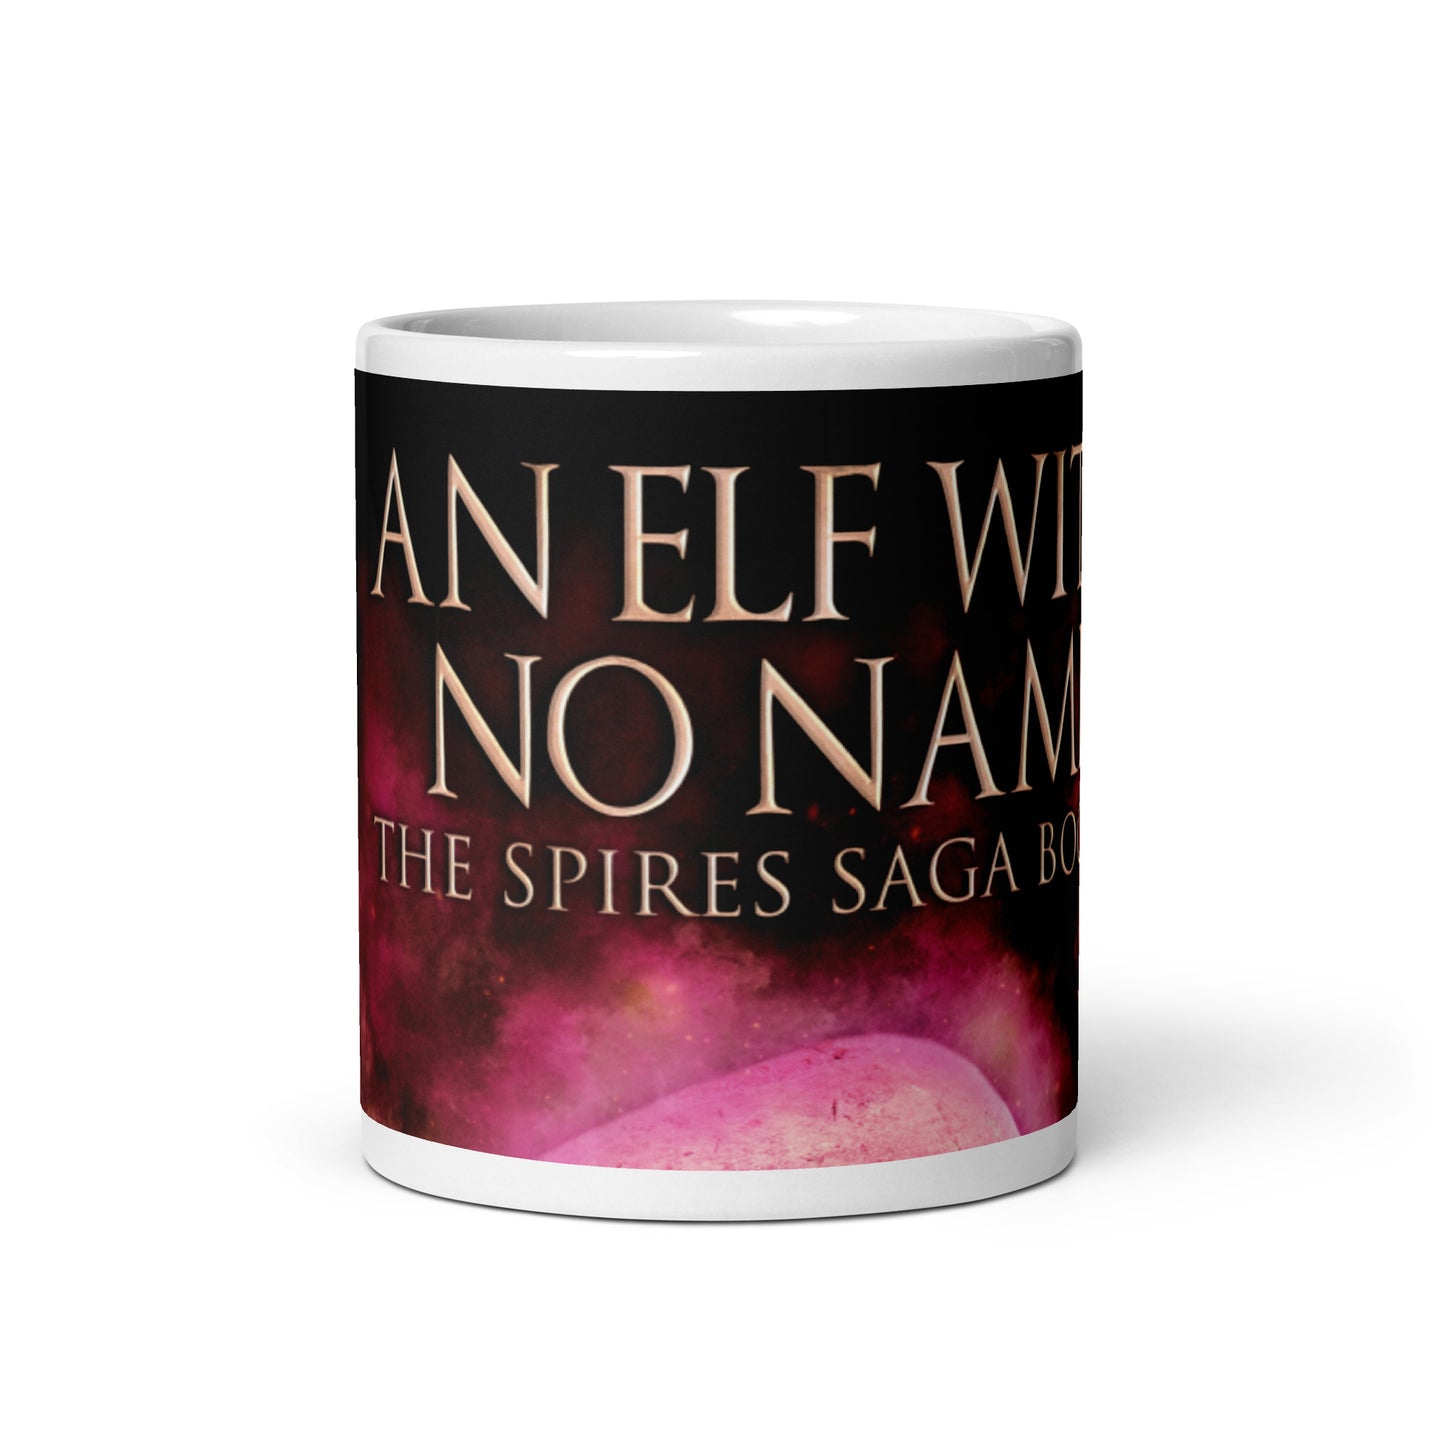 An Elf With No Name - White Coffee Mug